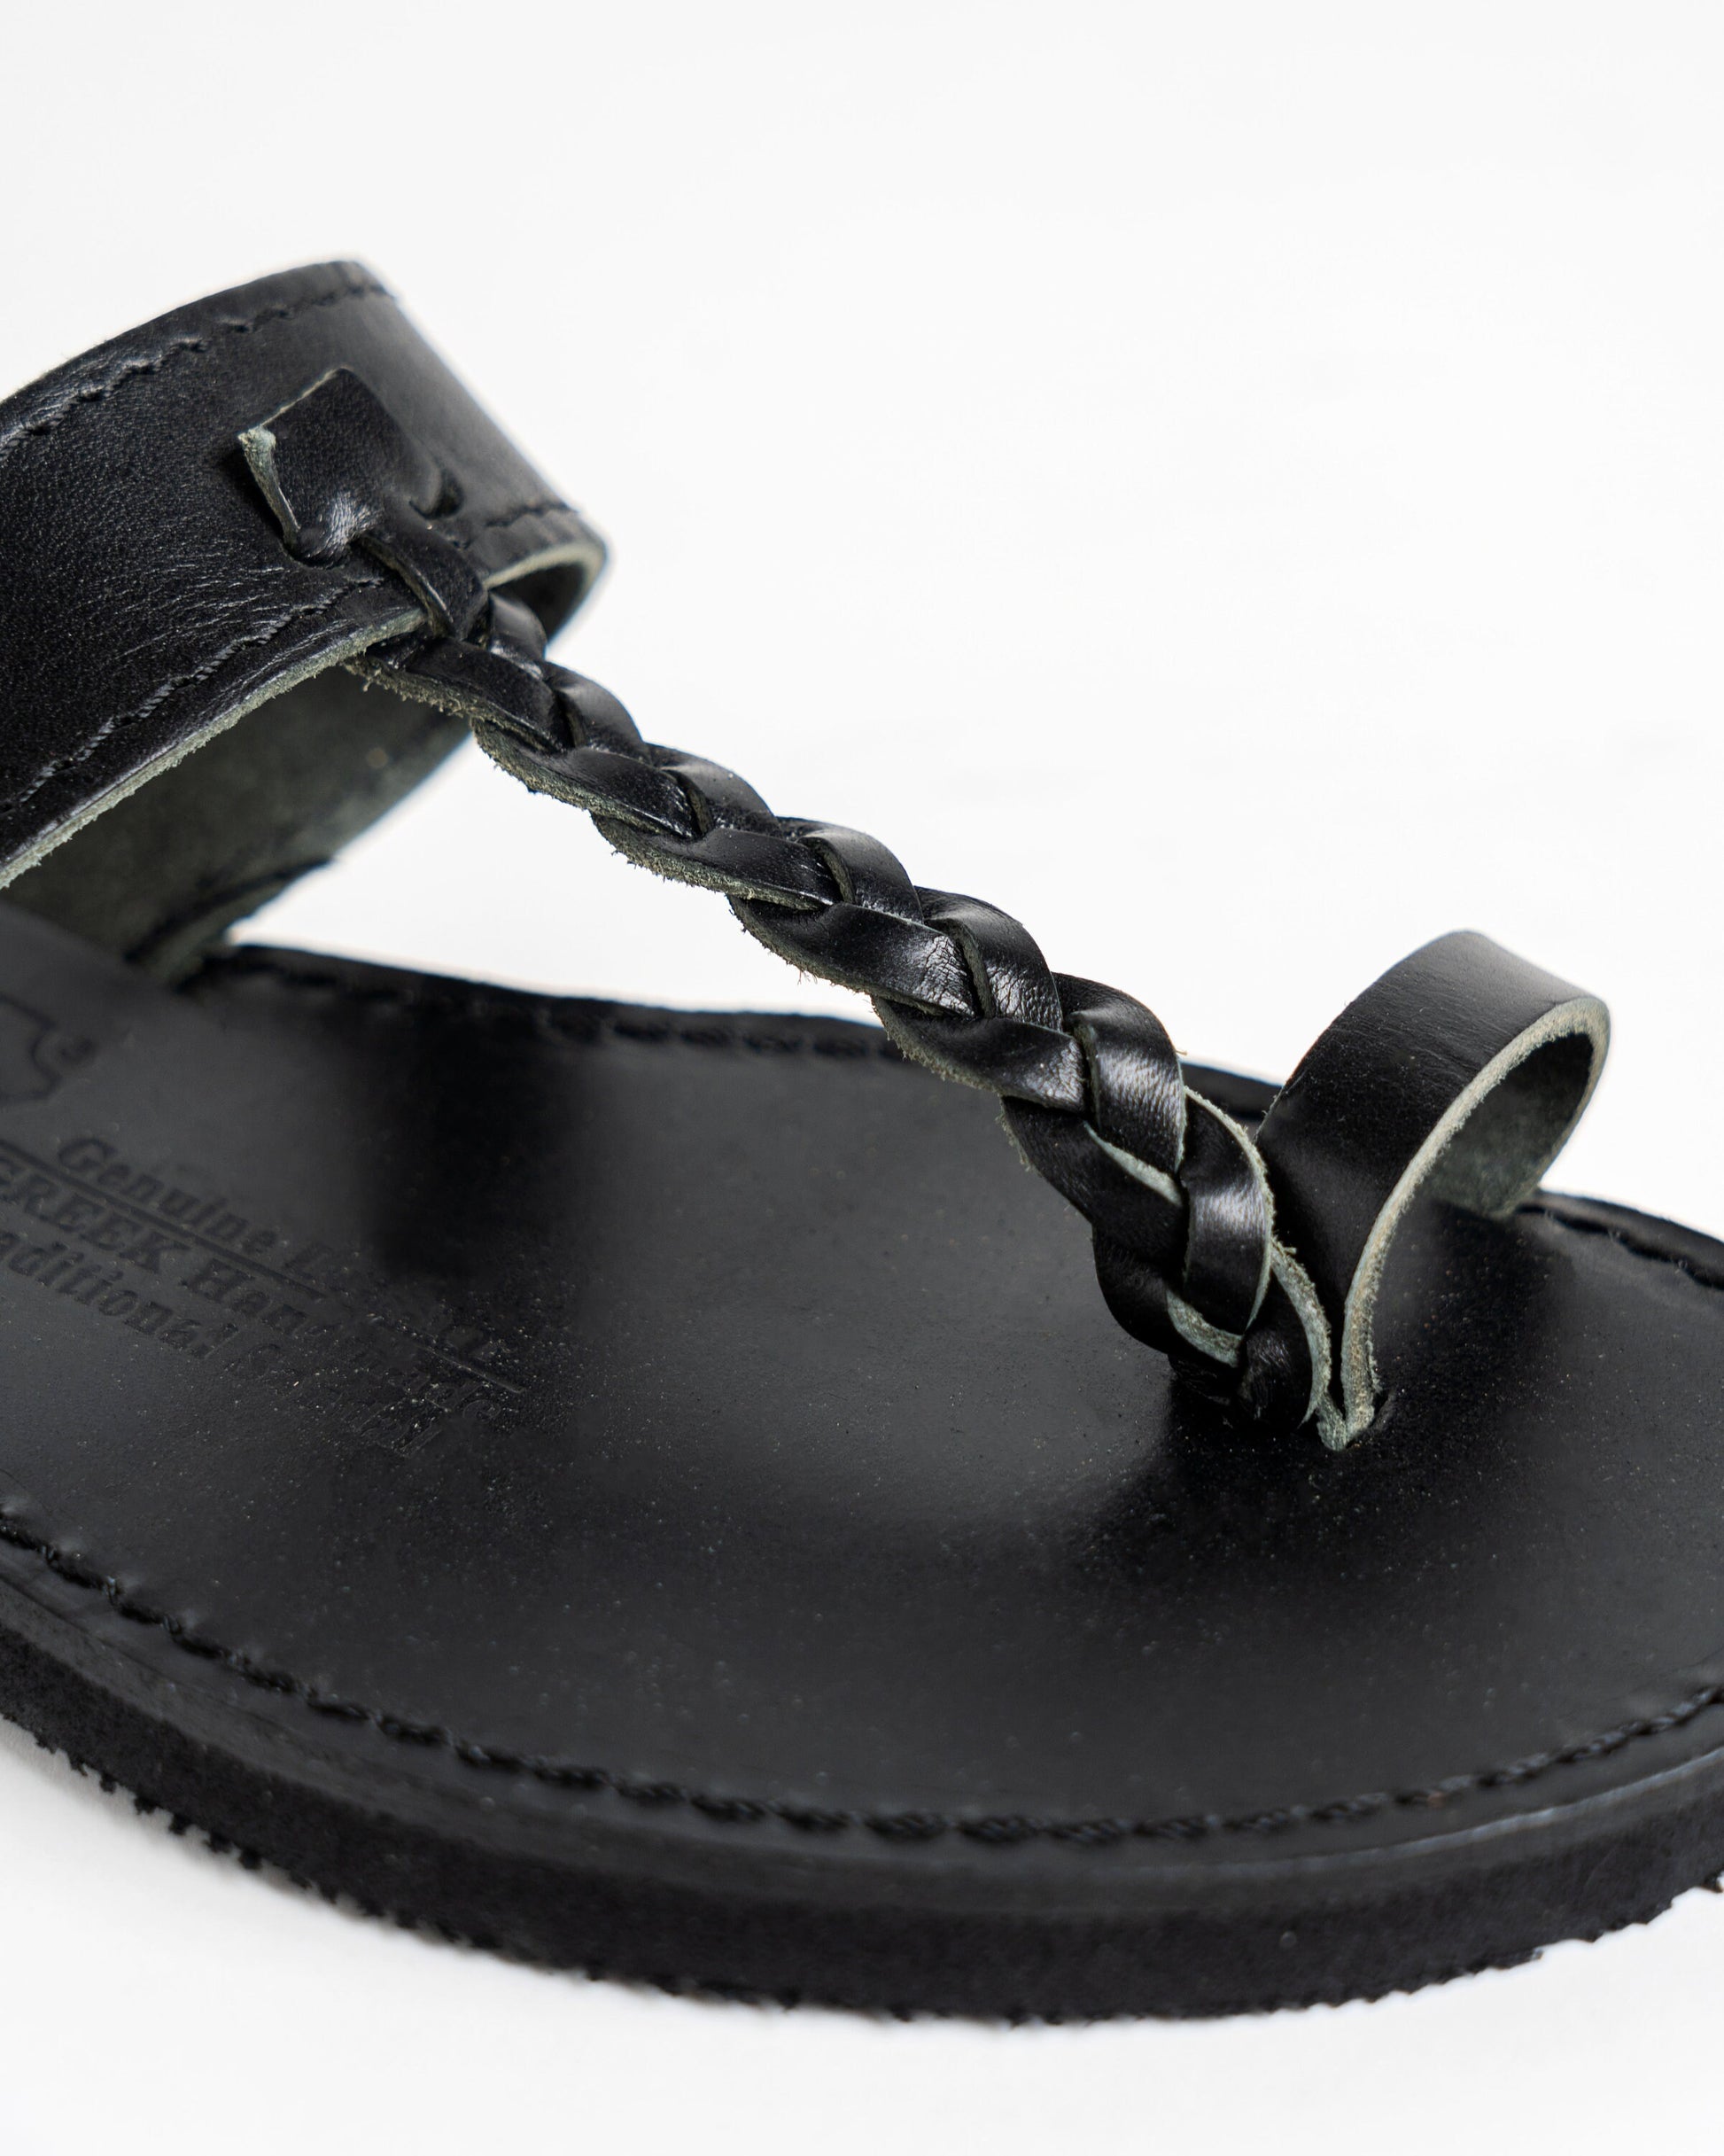 Black leather sandals women, Toe ring leather greek sandals, Minimalist leather flats, Sandales cuir femme